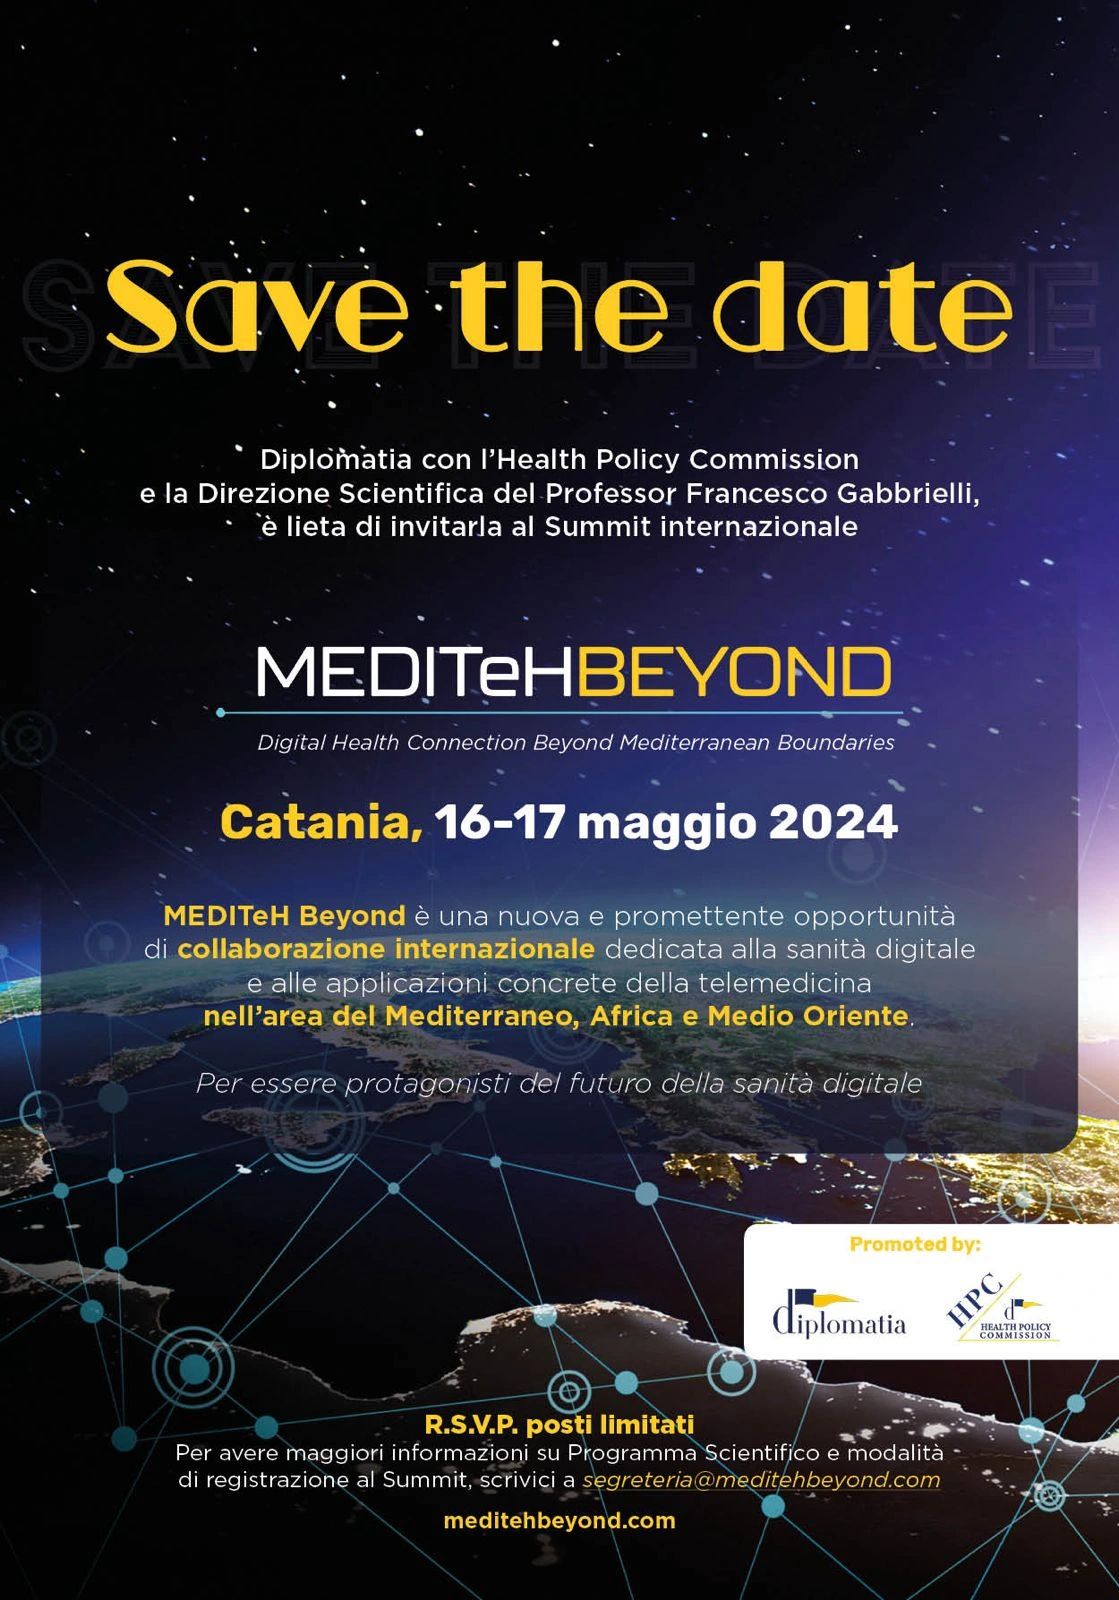 MEDITeH BEYOND - Digital Health Connection Beyond Mediterranean Boundaries